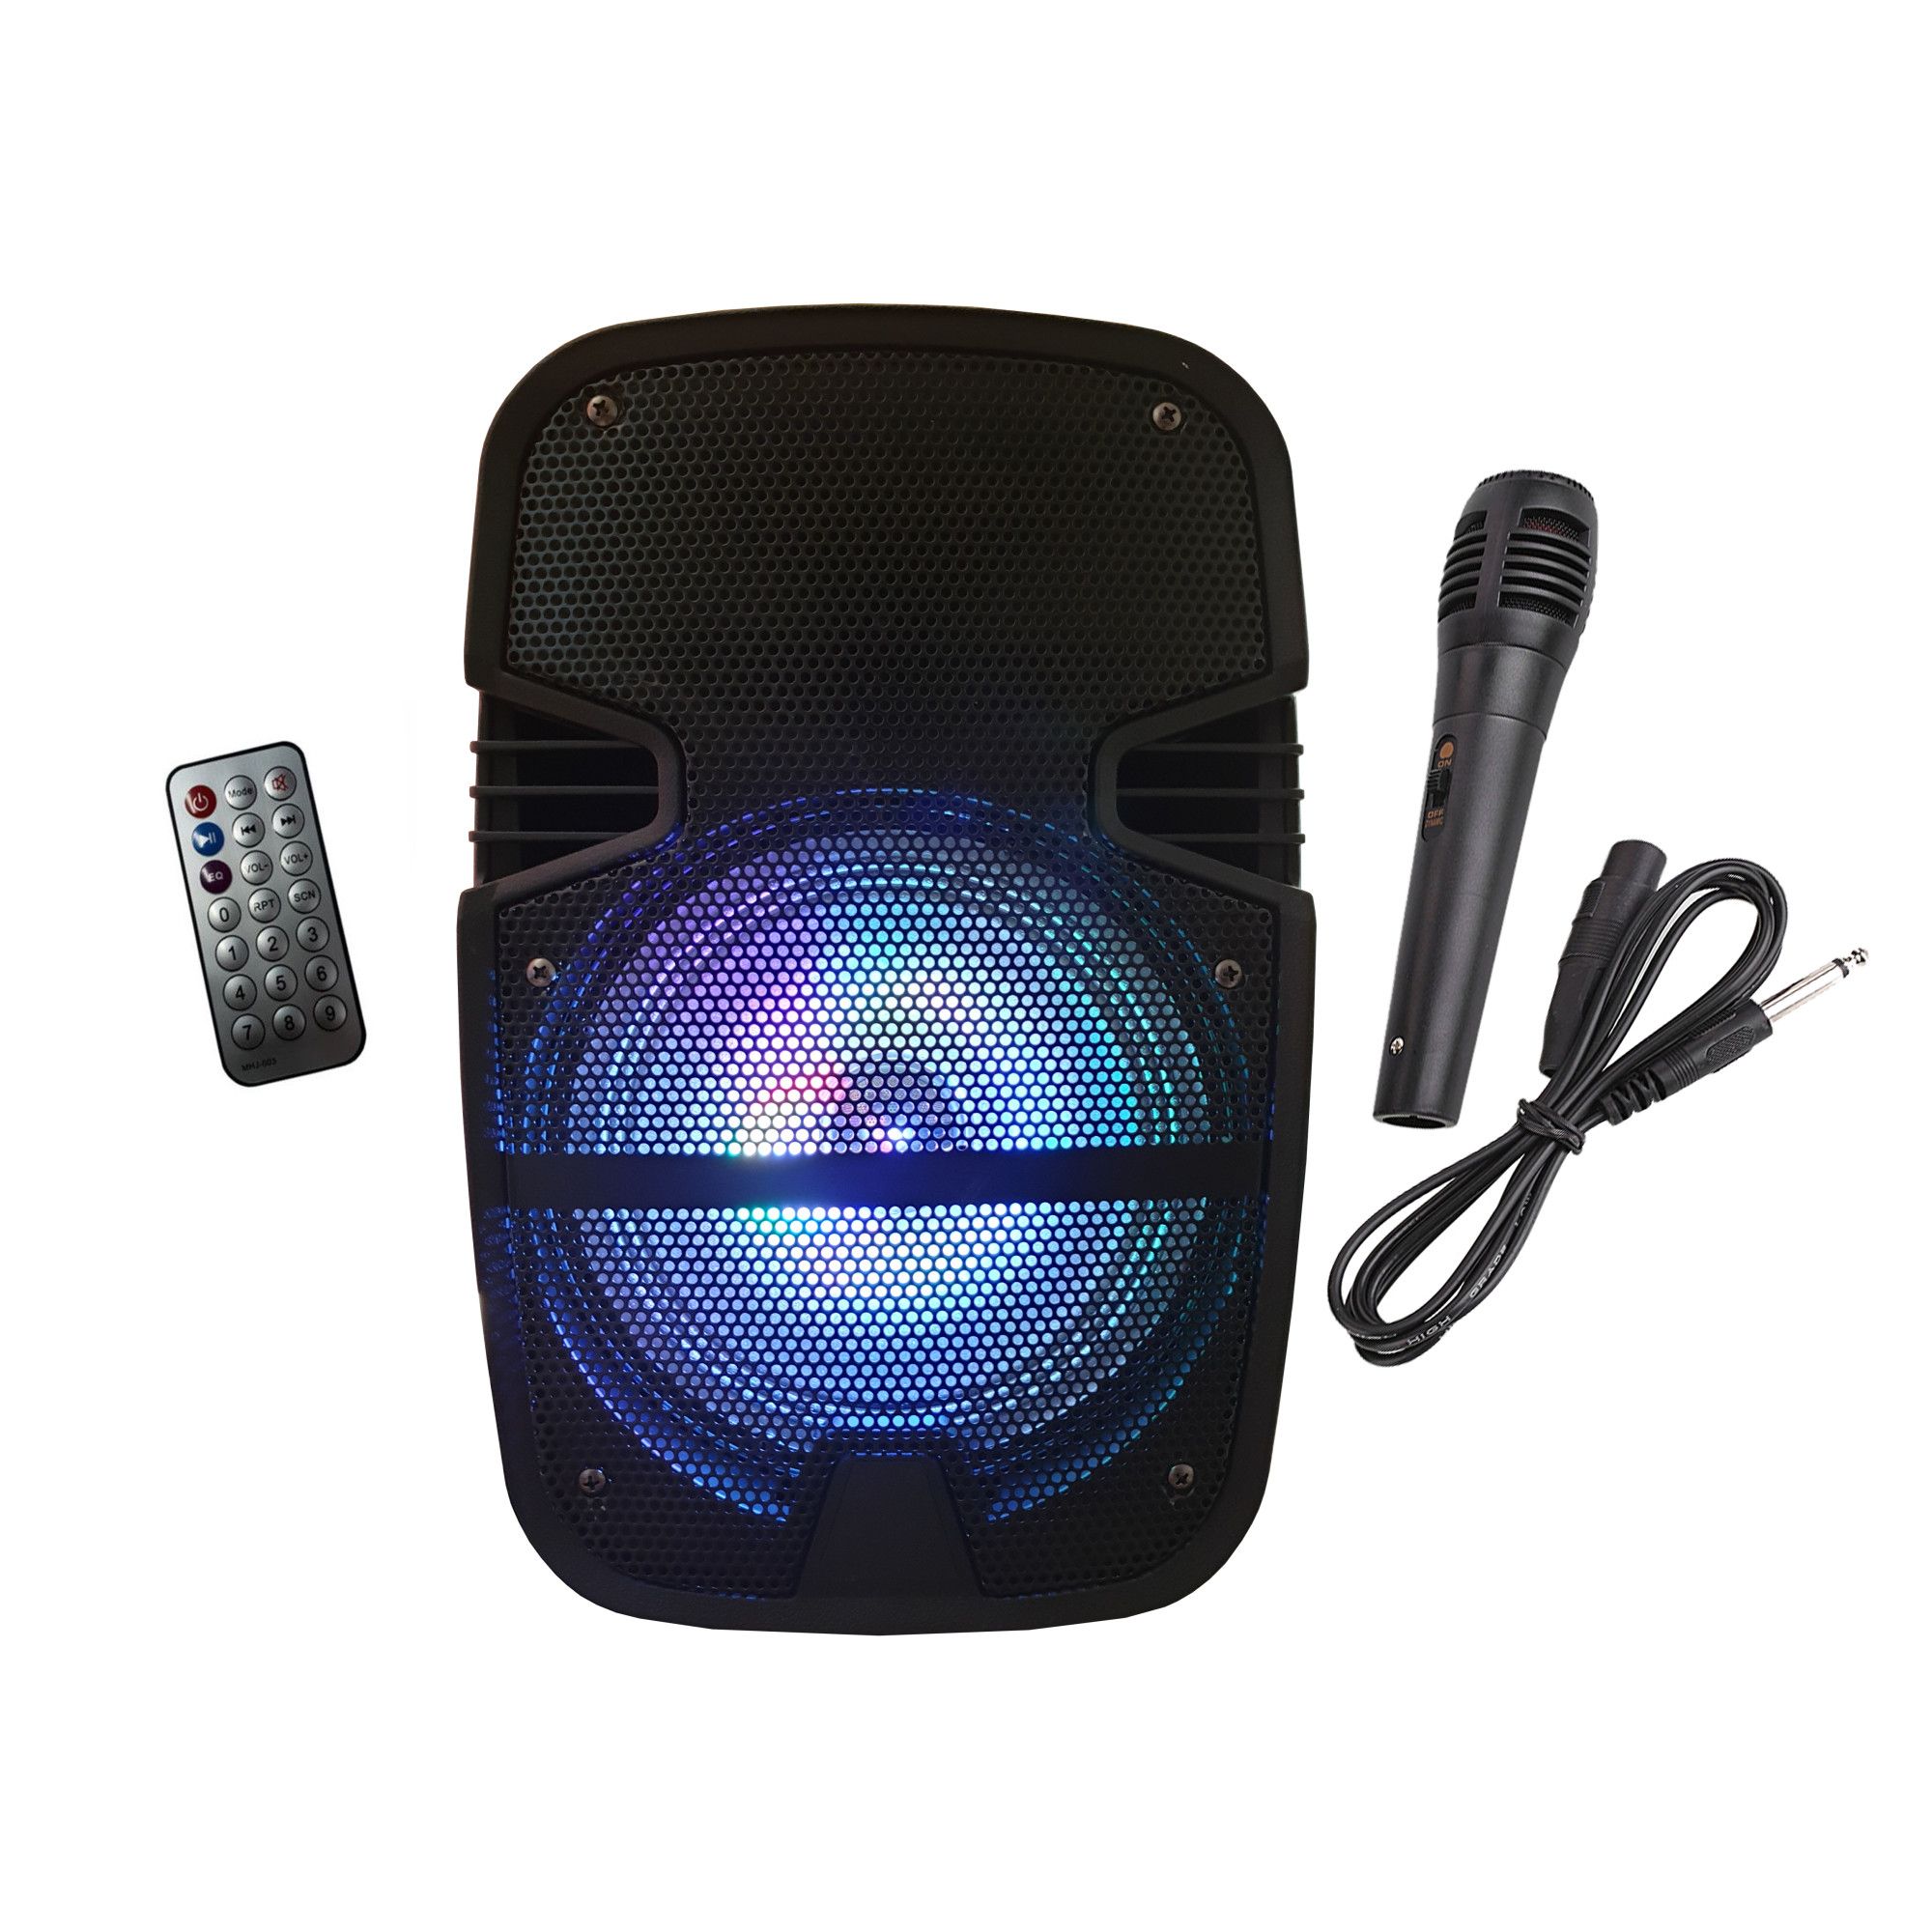 Boxa audio portabila klausstech , putere 40 w, microfon inclus ,port usb , slot sd card , lumini rgb , telecomanda inclusa, negru